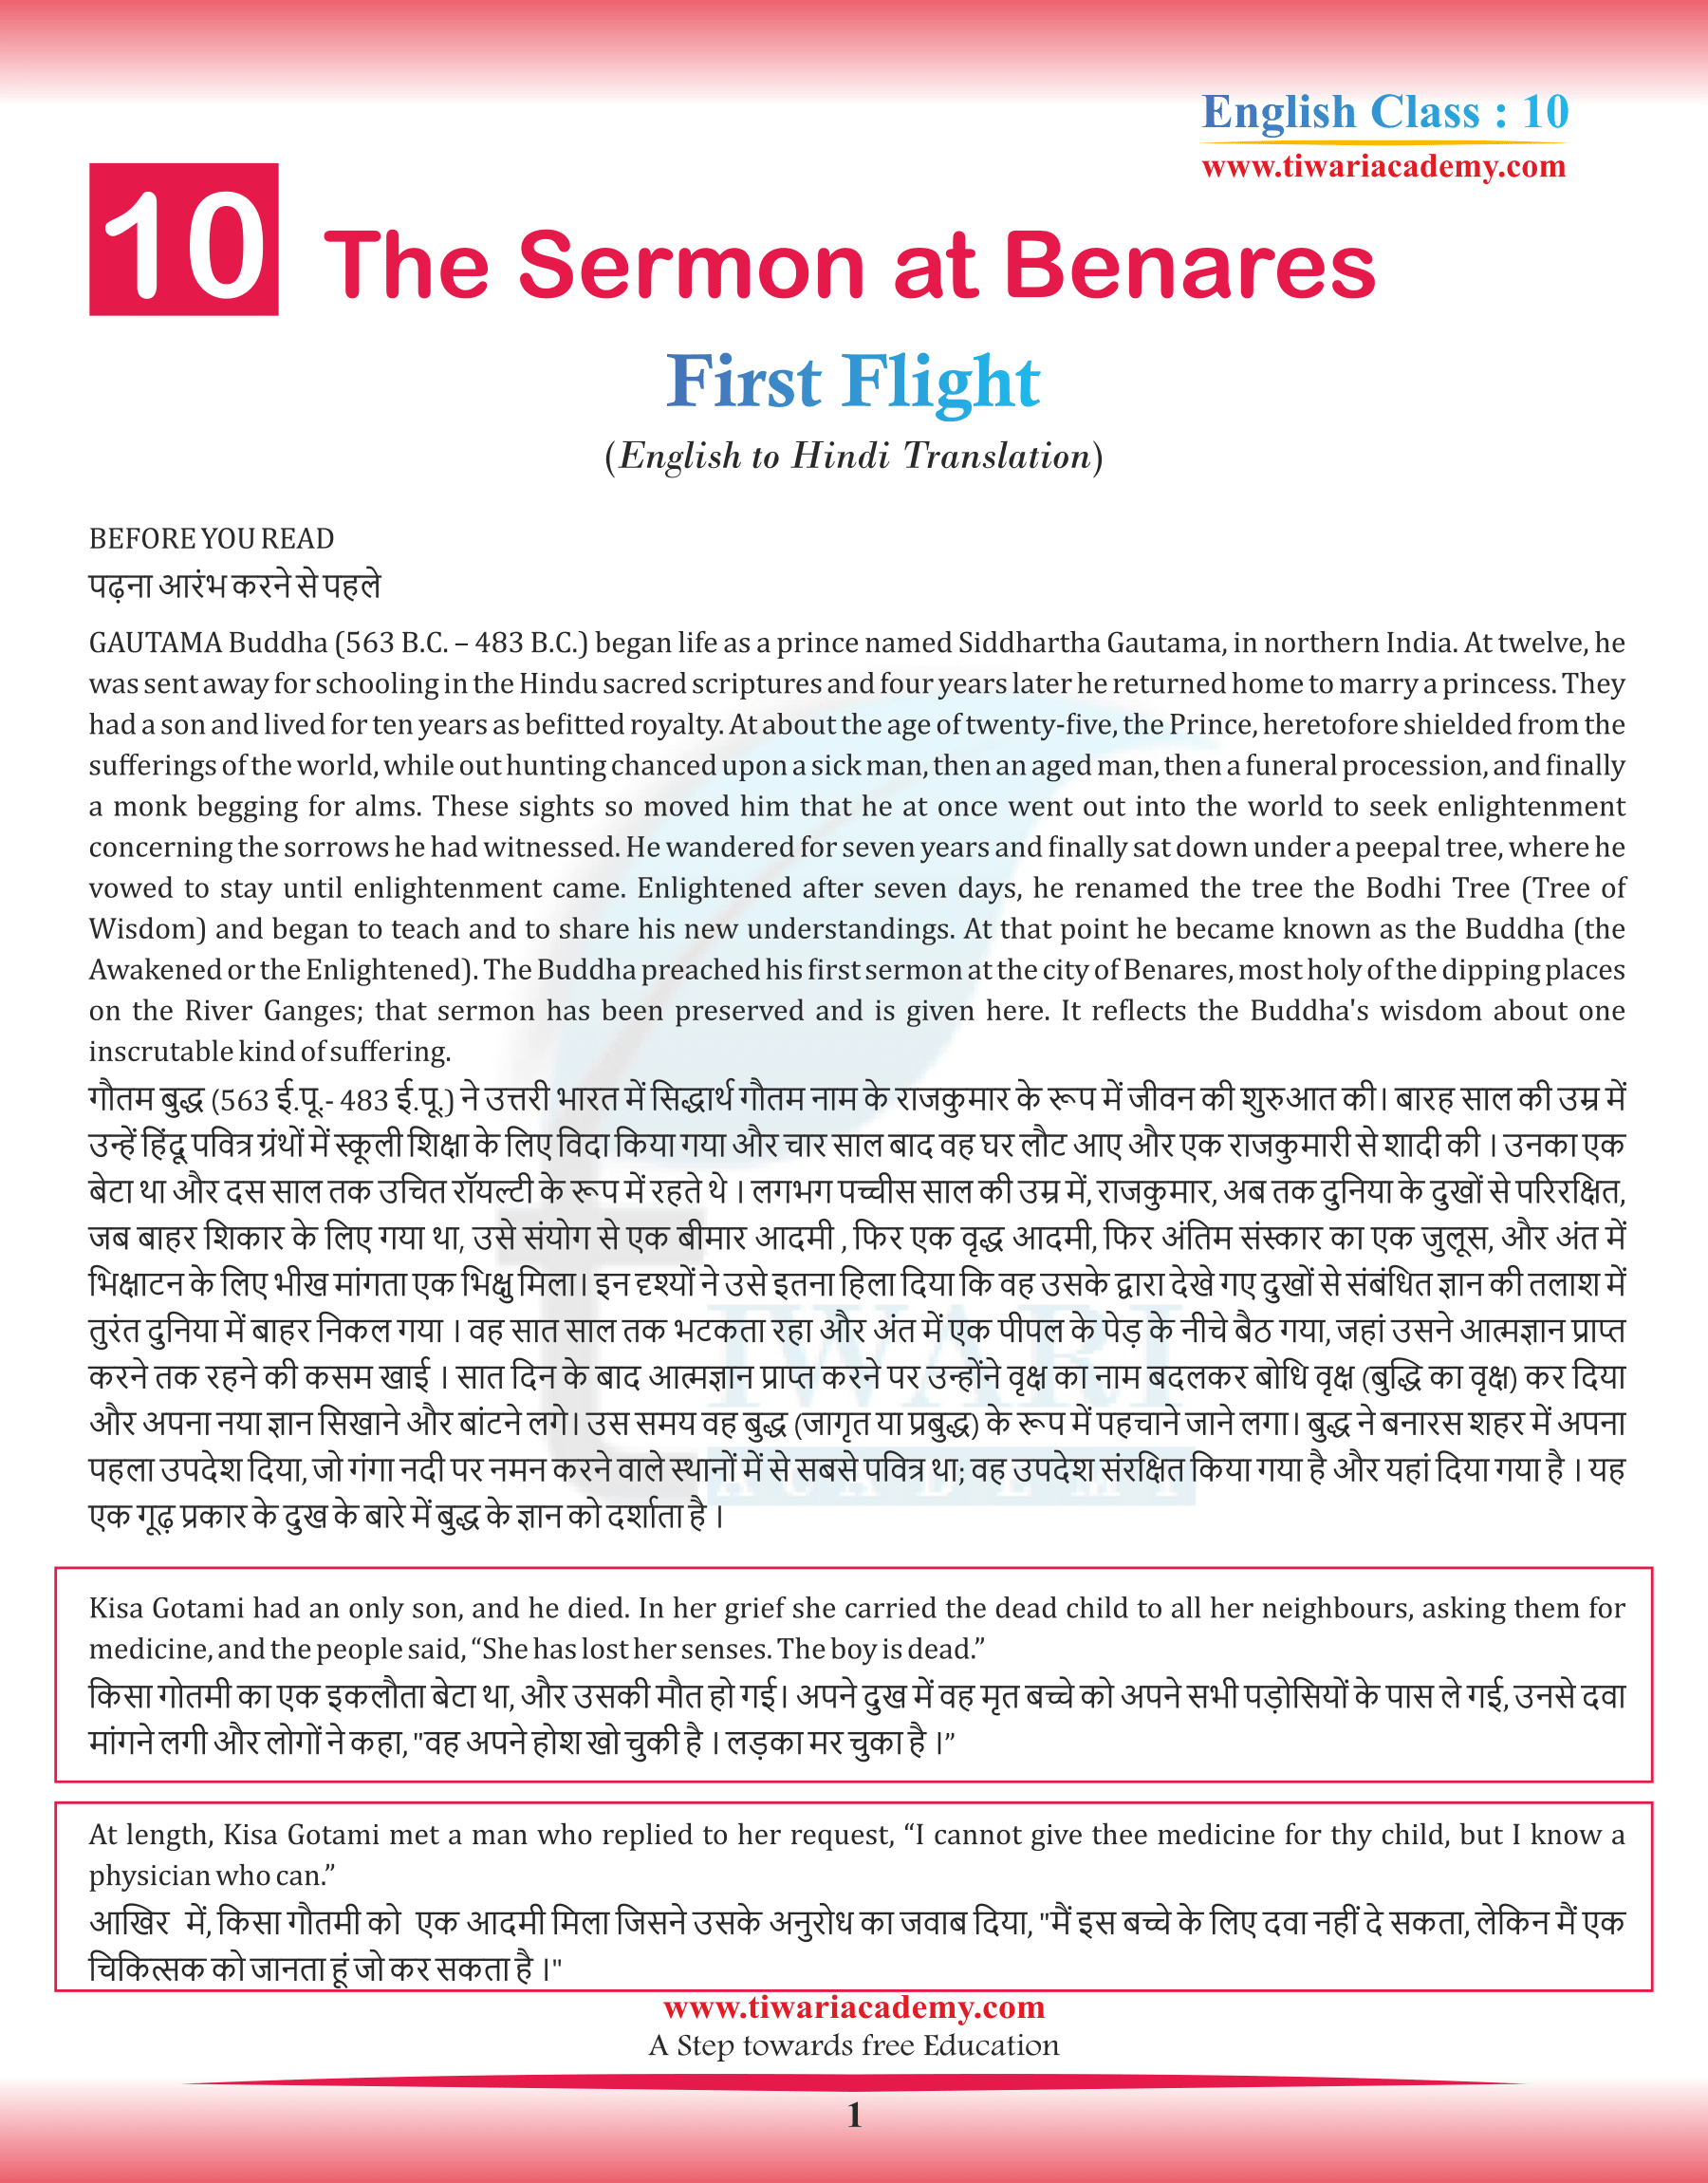 Class 10 English First Flight Chapter 10 The Sermon of Benares in Hindi Medium